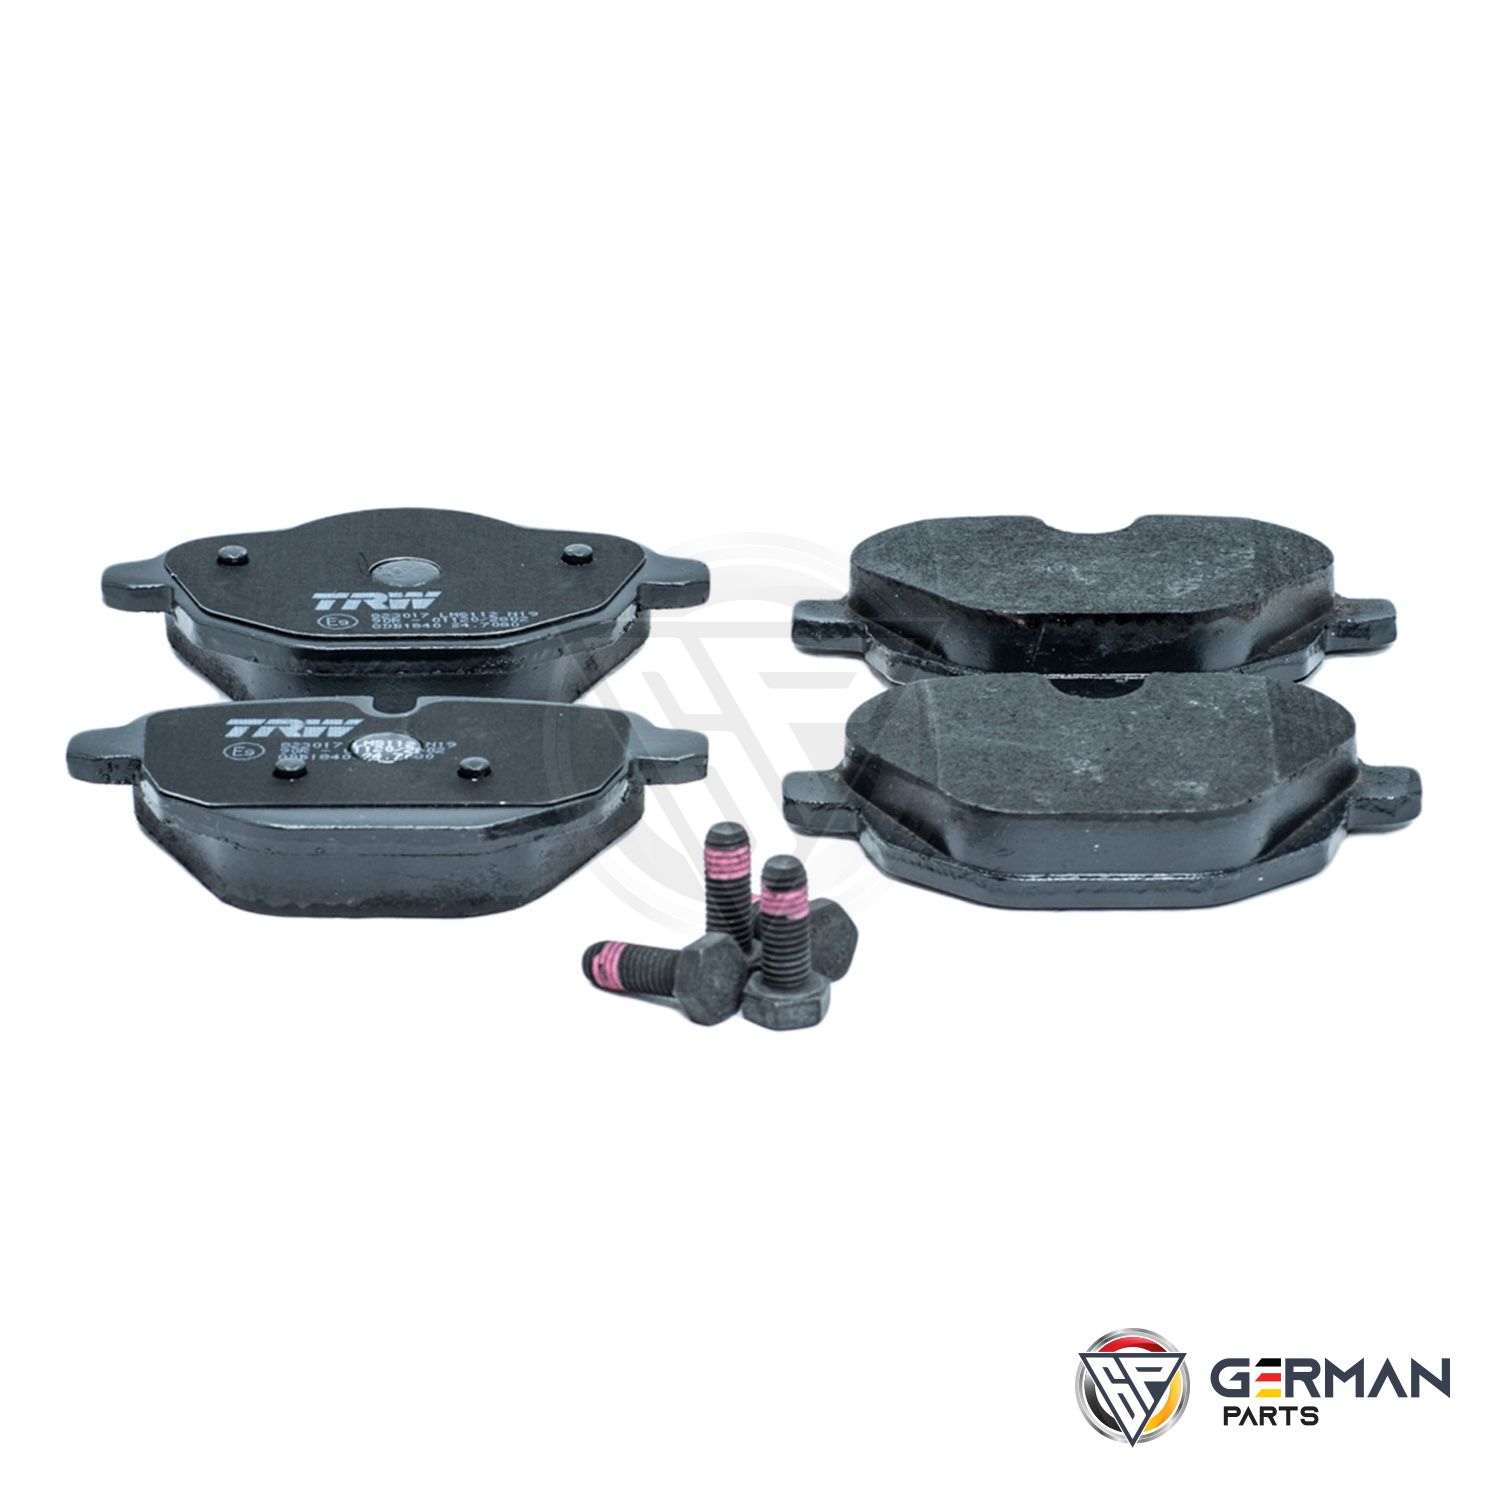 Buy TRW Rear Brake Pad Set 34216862202 - German Parts